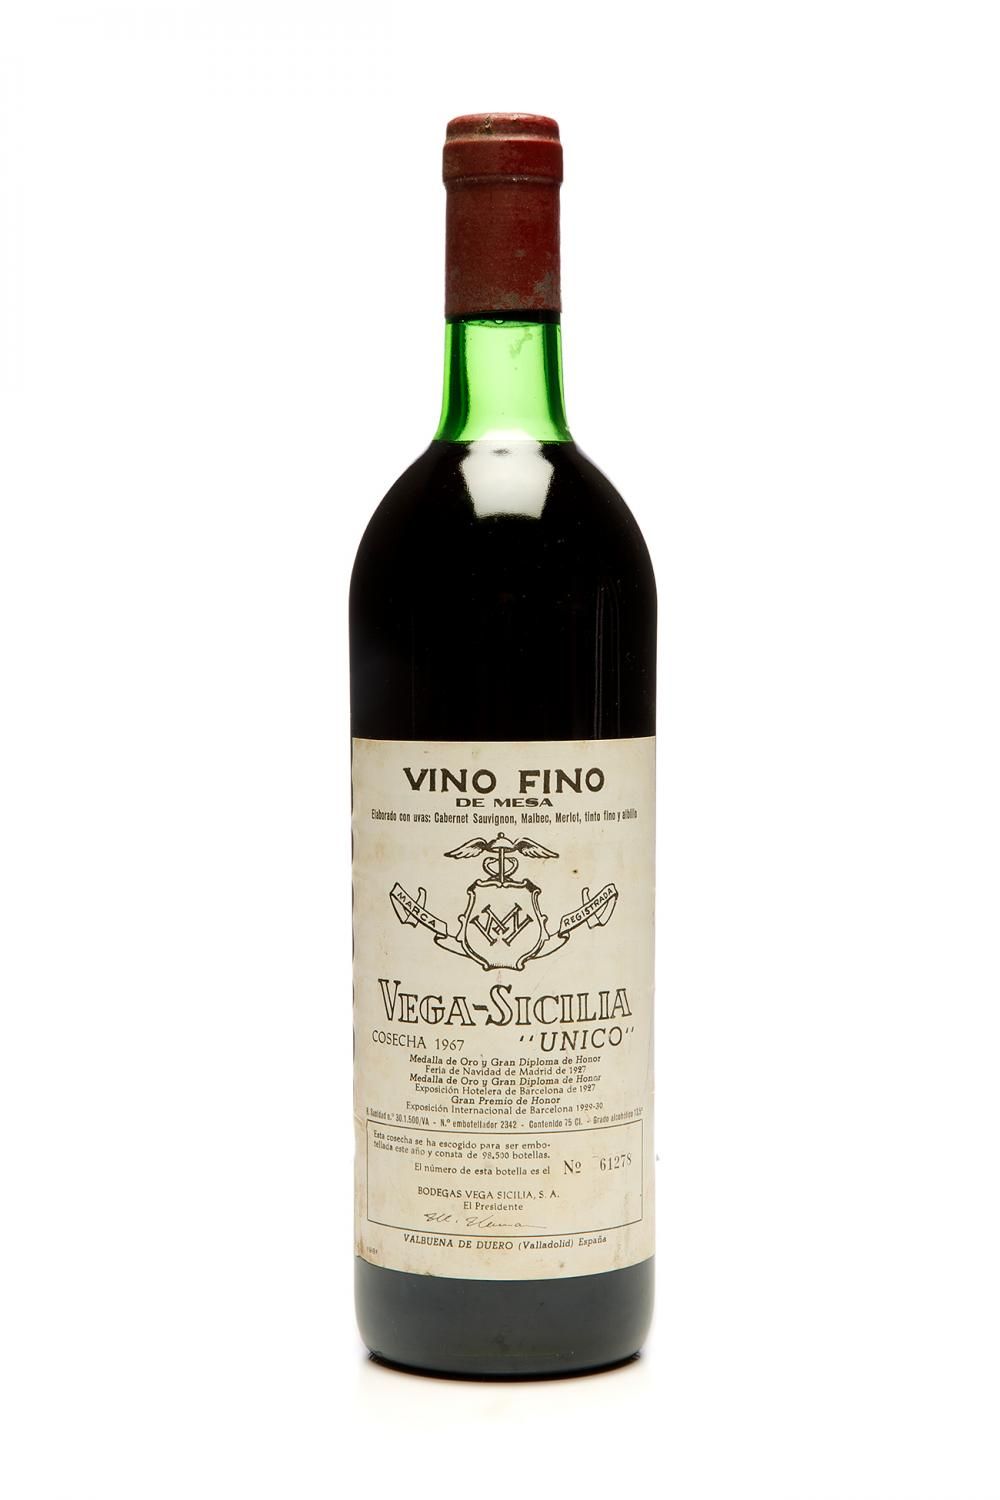 Null 1 bouteille de Vega Sicilia "Único" 1967. Ribera del Duero, Espagne.

Vin r&hellip;